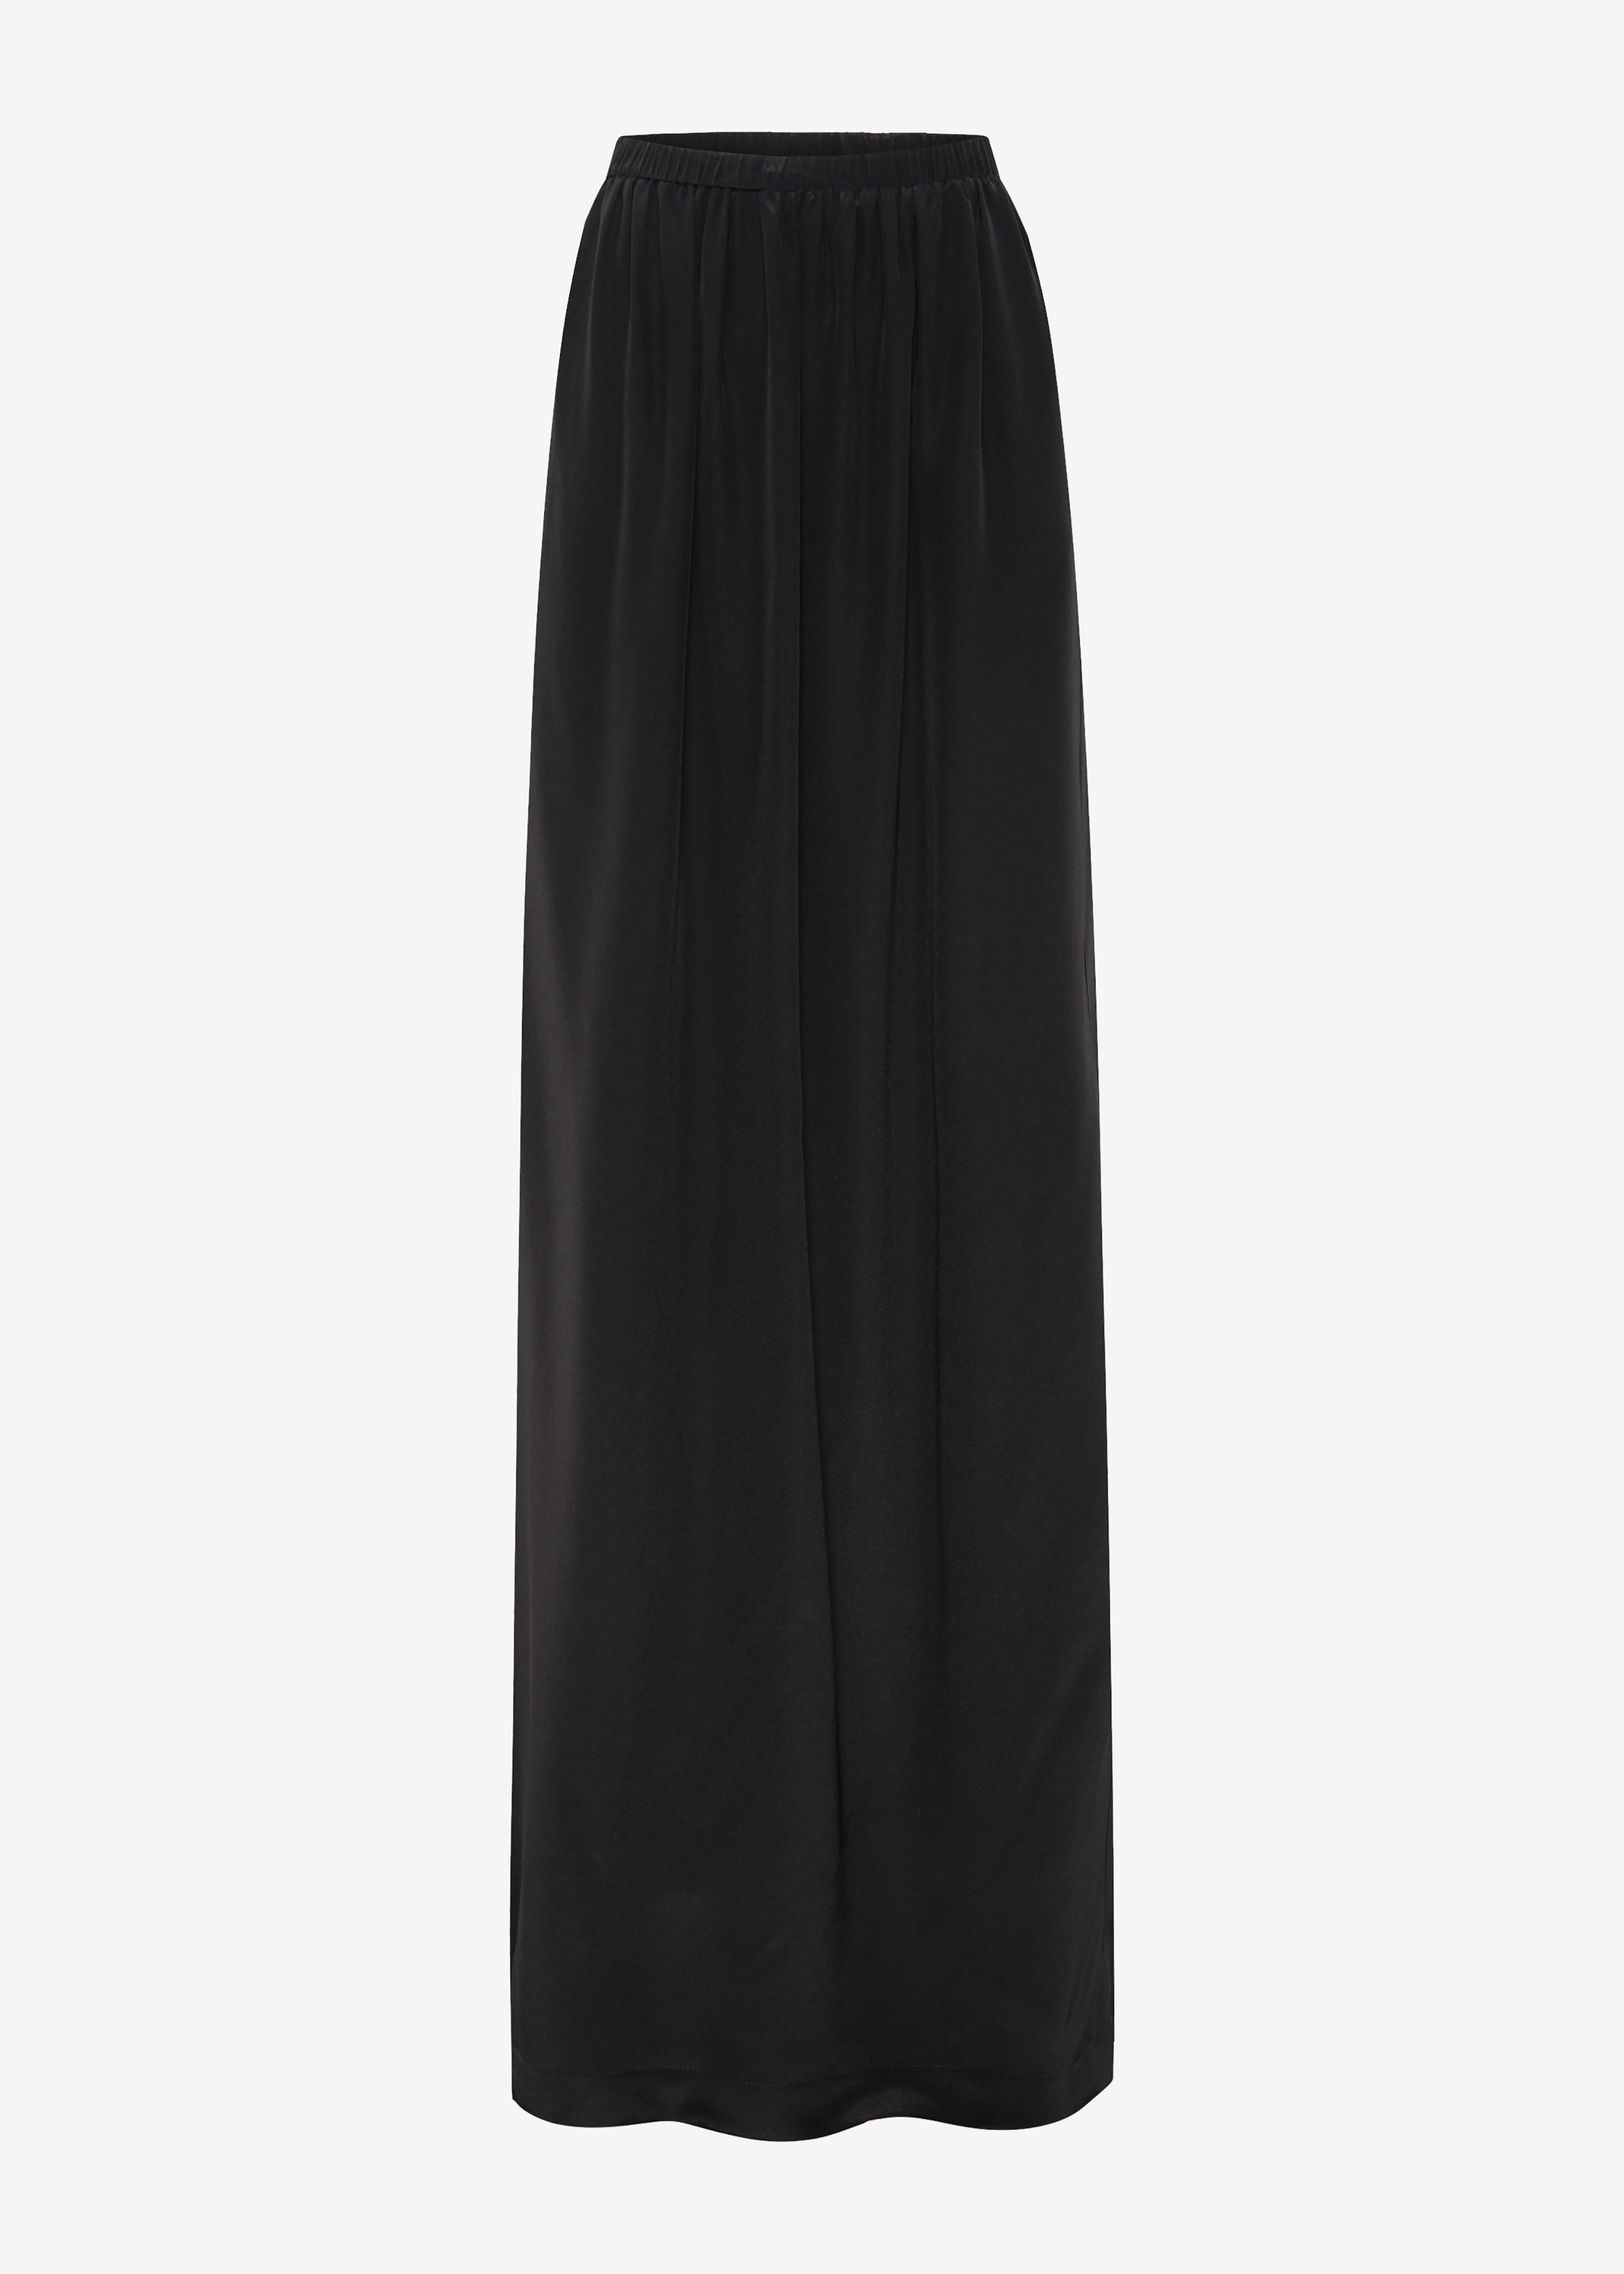 Beare Park Silk Elastic Waist Skirt - Black - 9